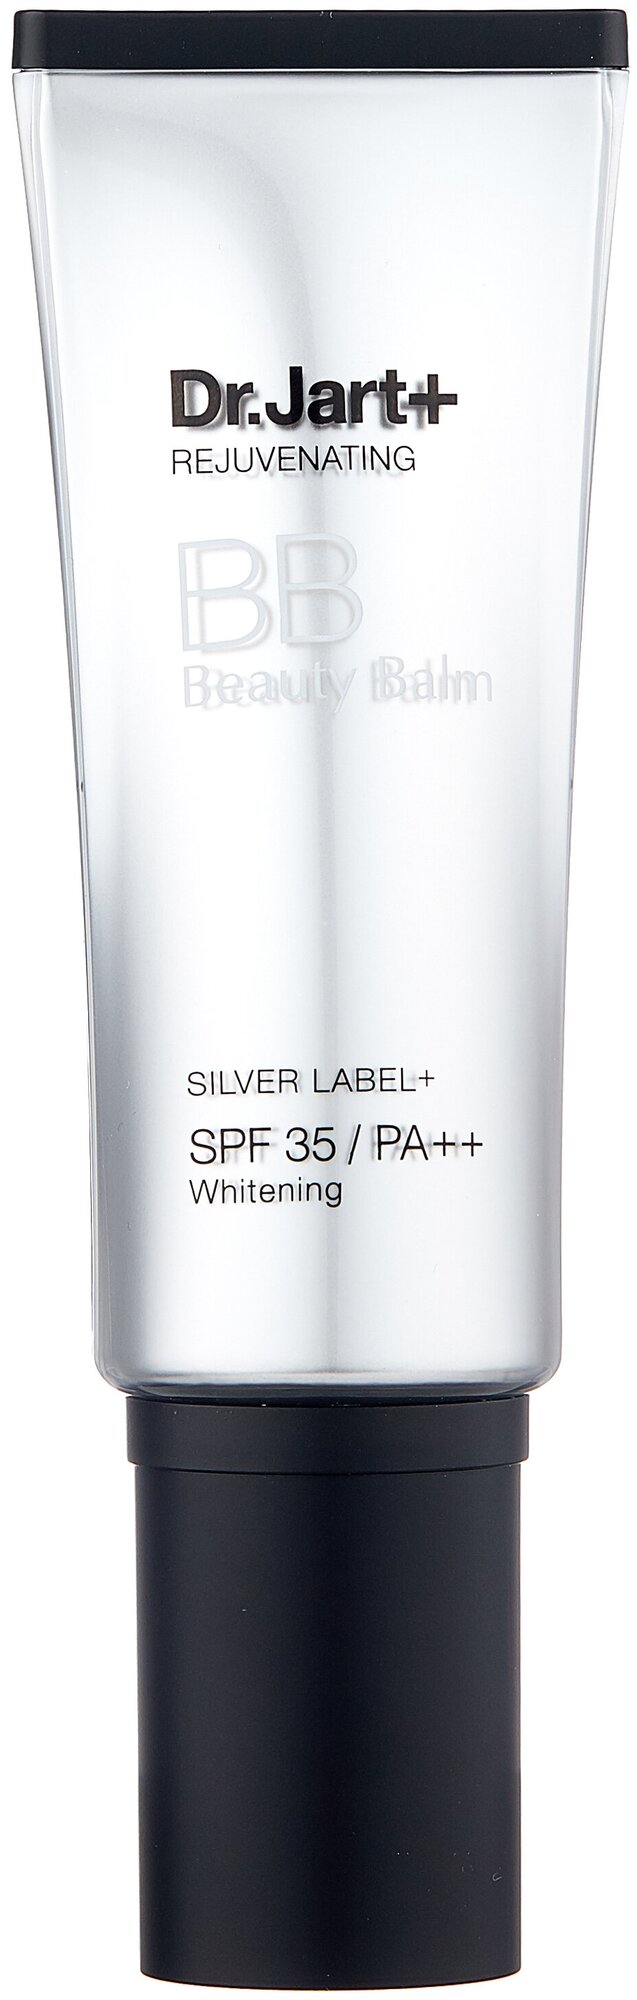 Dr. Jart+ BB крем Rejuvenating Silver Label, SPF 35, 40 мл